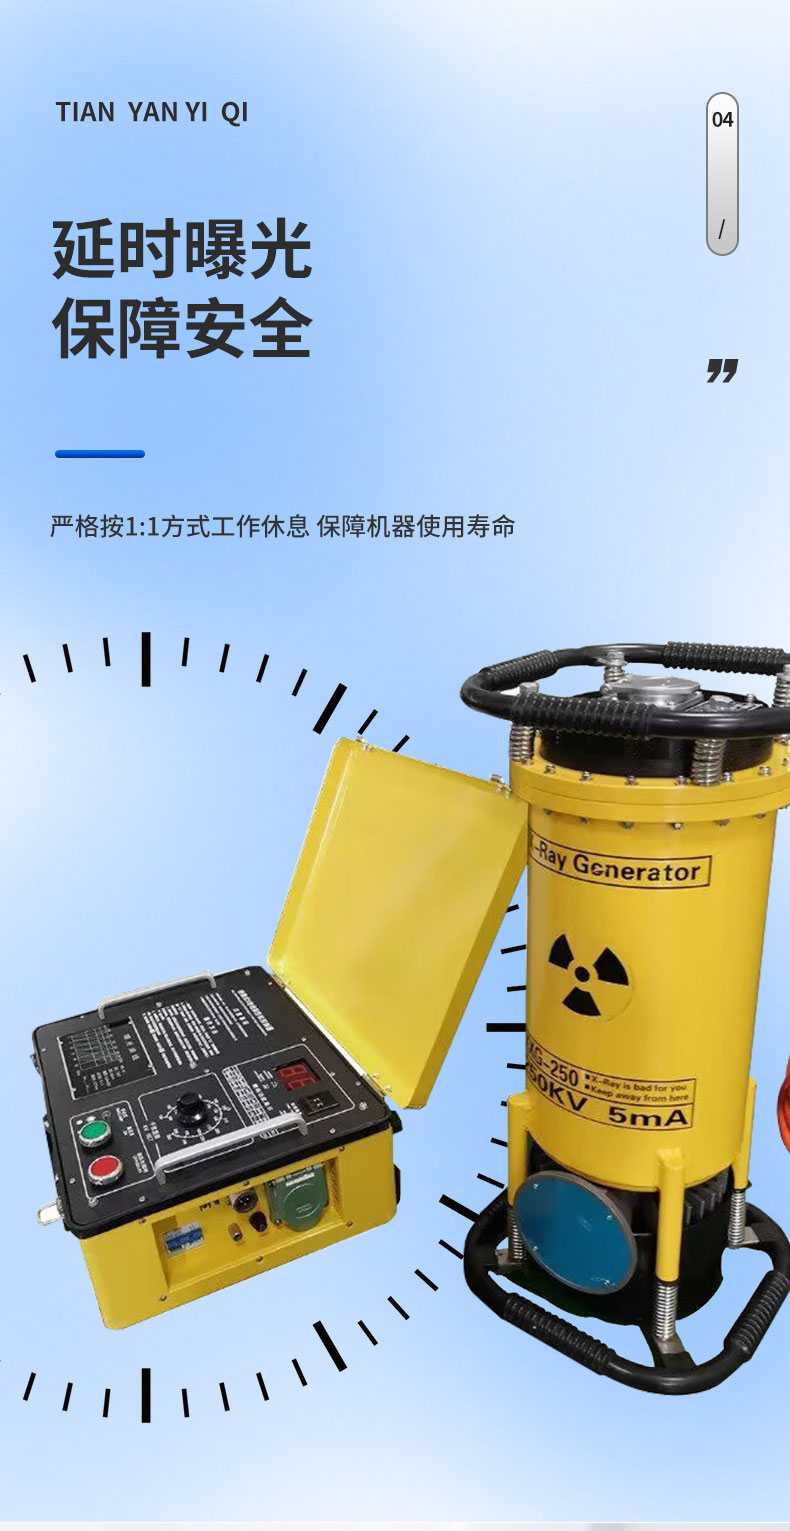 Portable Ceramic Directional X-ray Testing Machine Tianyan TY-XXG2505 Ceramic Testing Machine